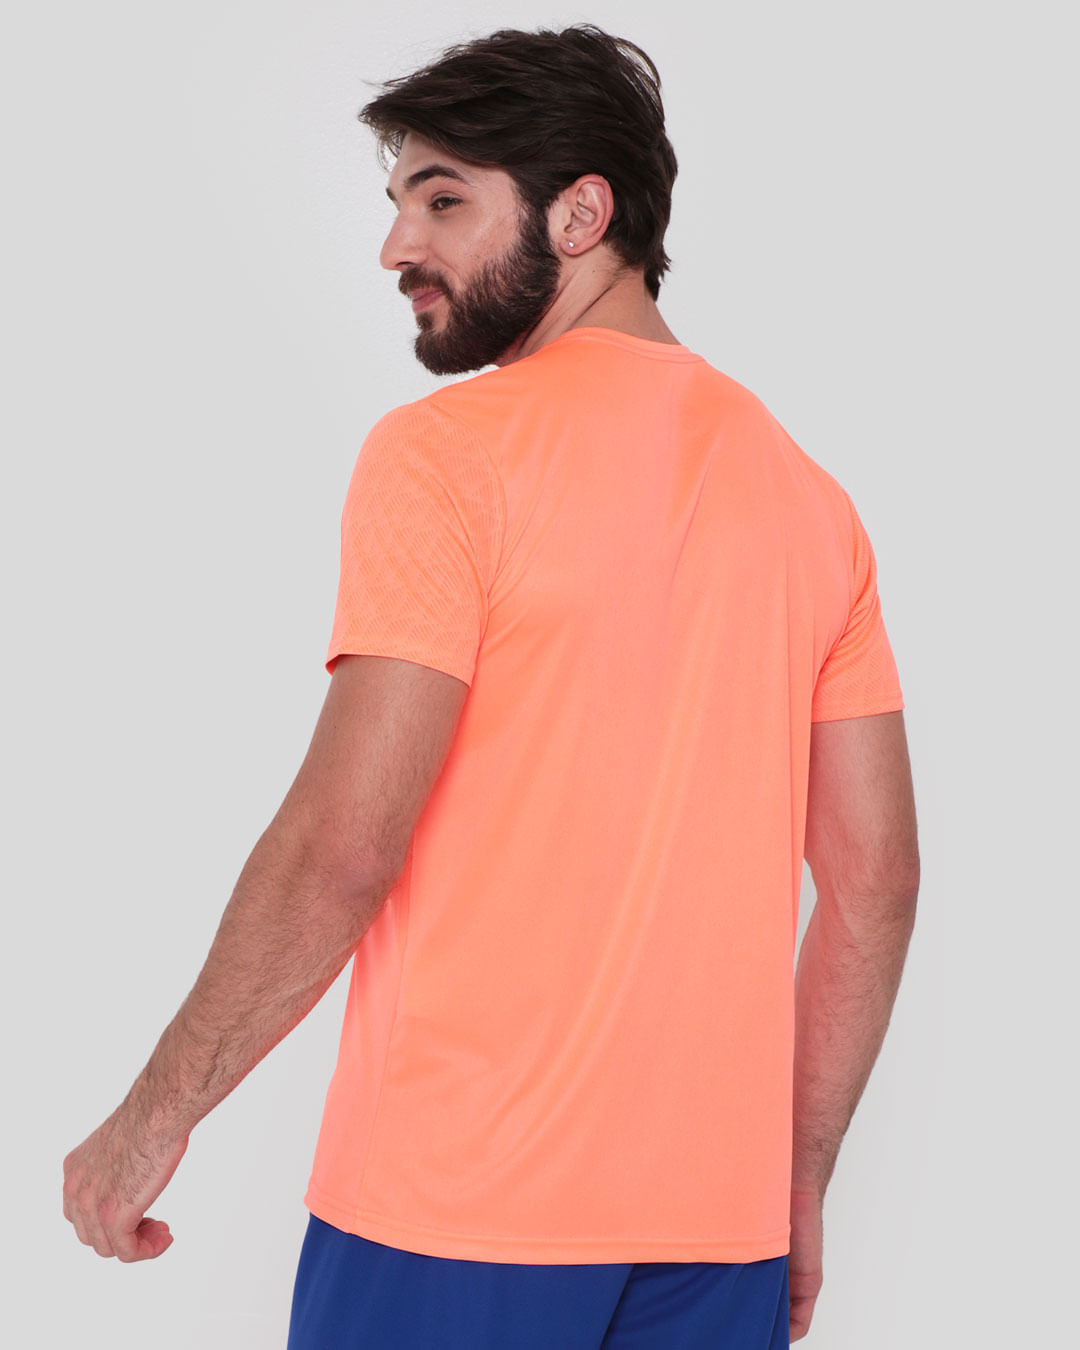 Camiseta-Masculina-Fitness-Neon-Laranja